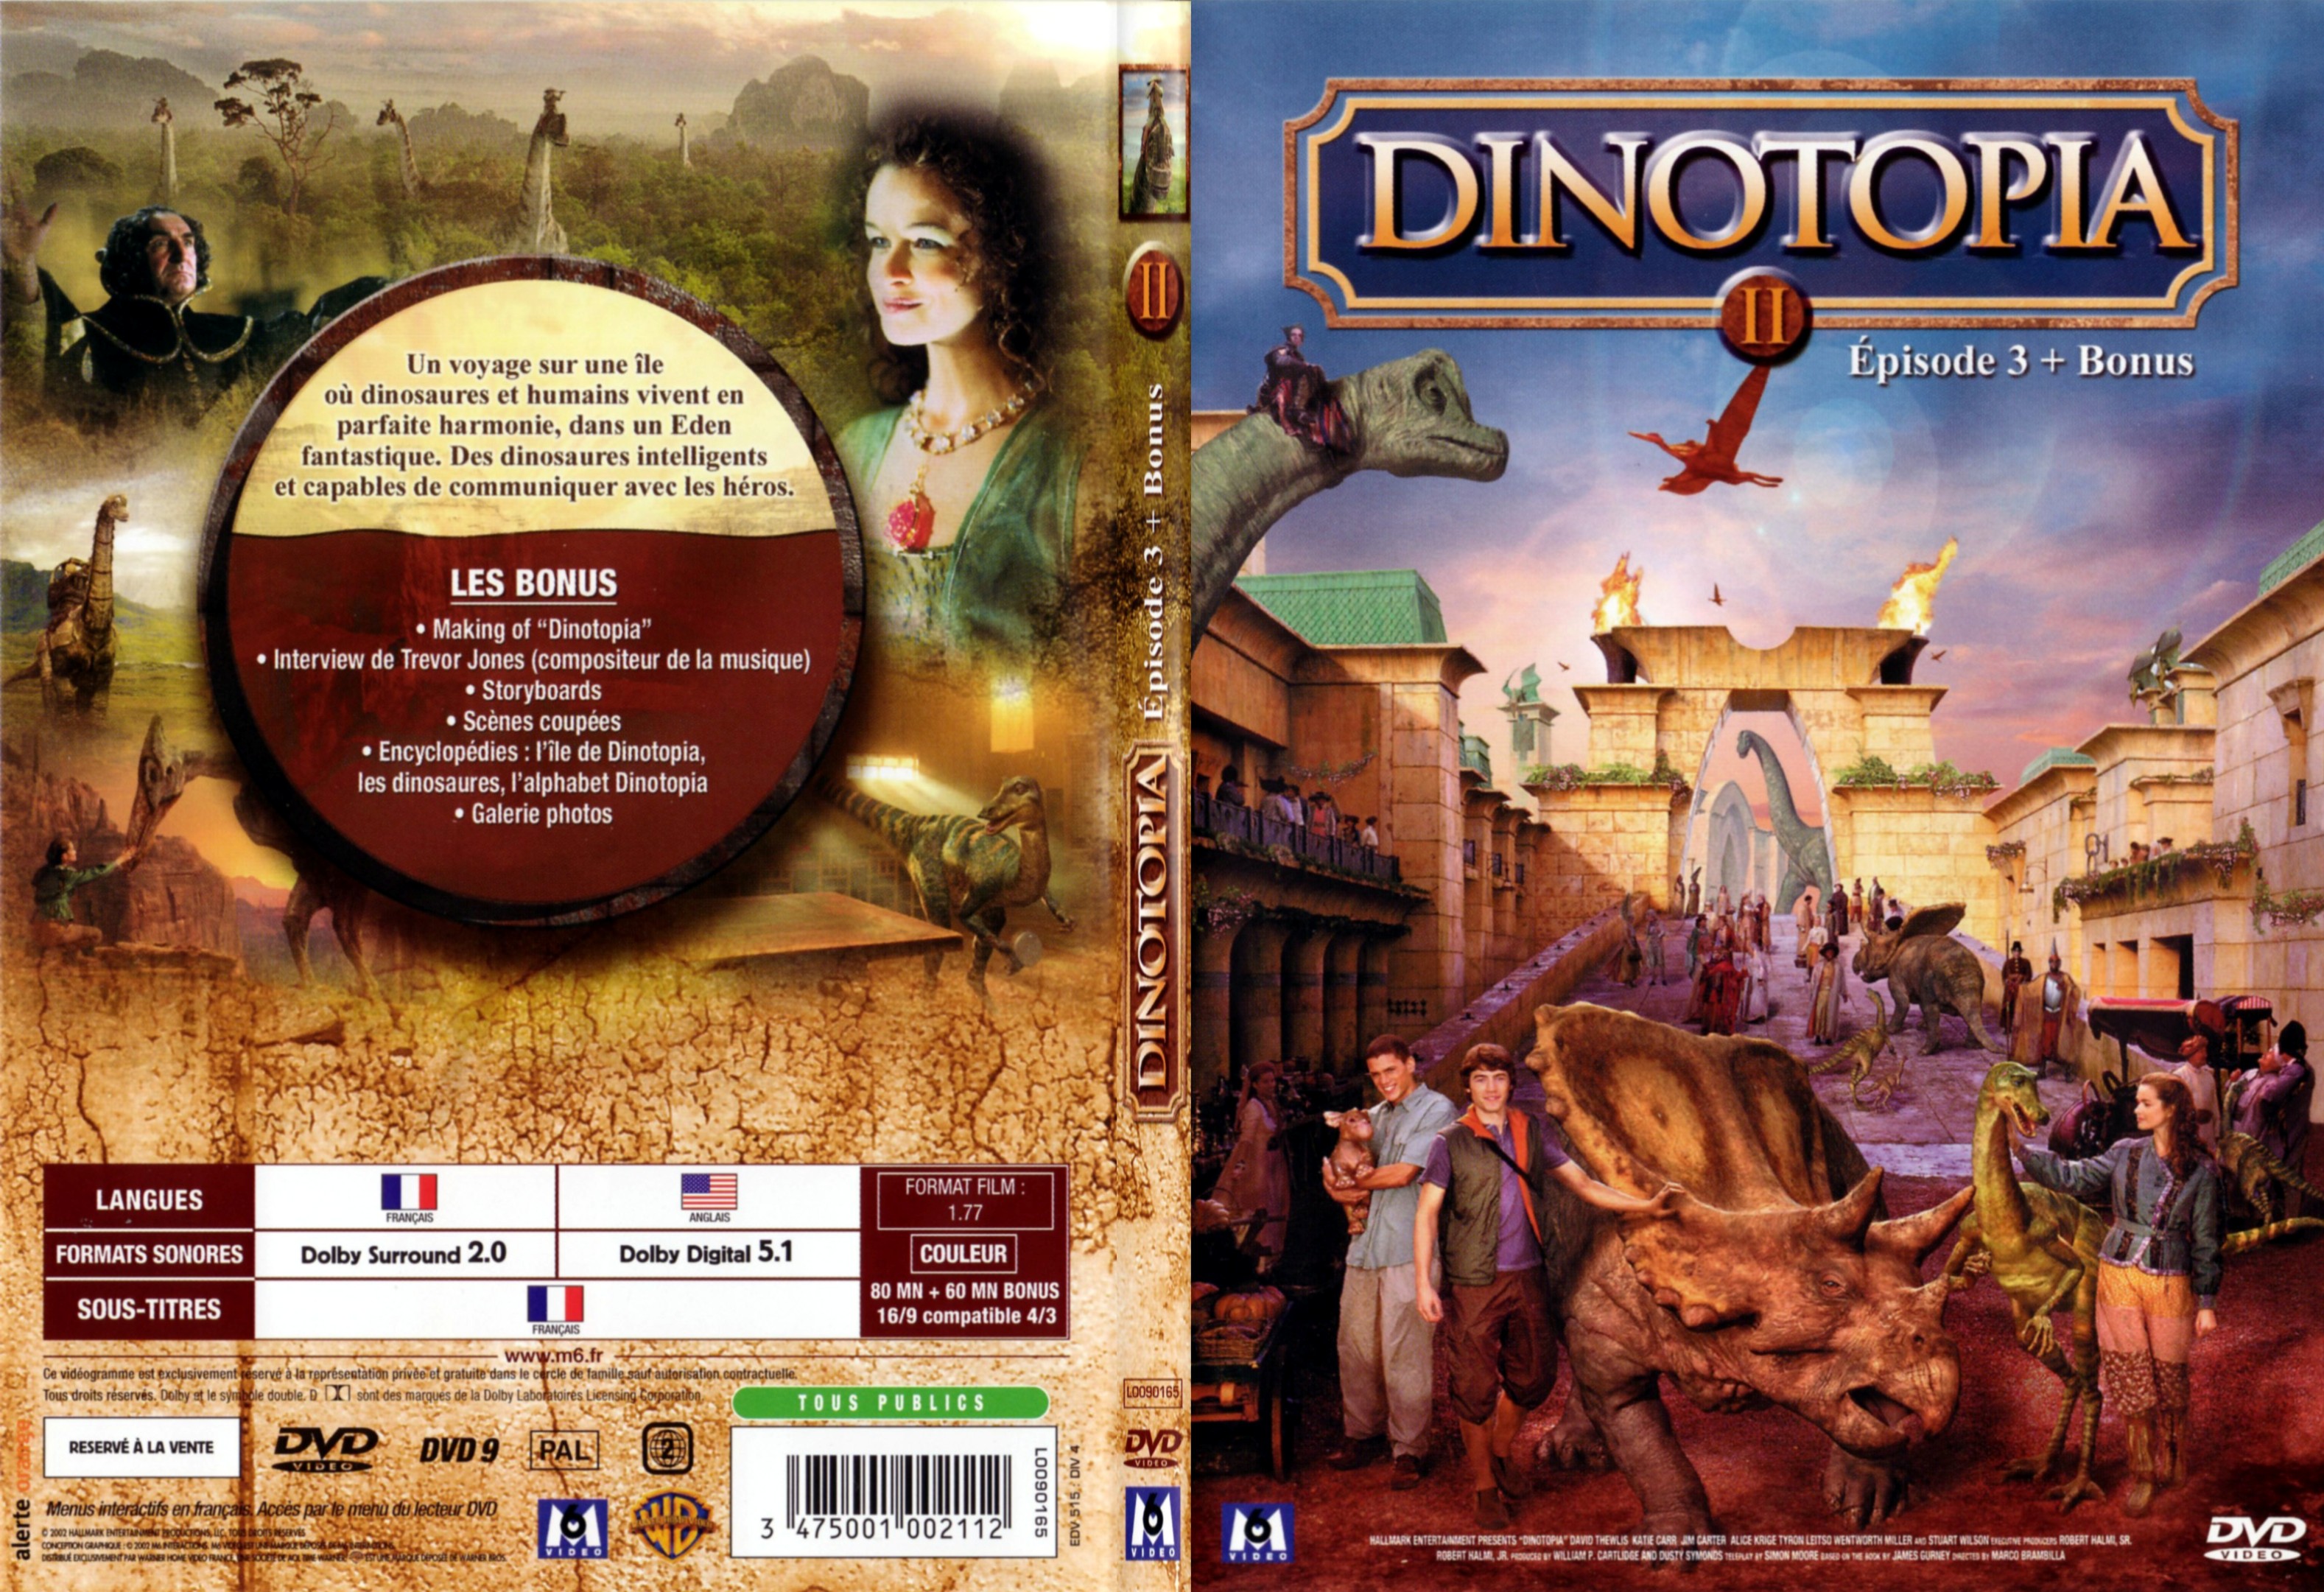 Jaquette DVD Dinotopia 1 vol 2 - SLIM